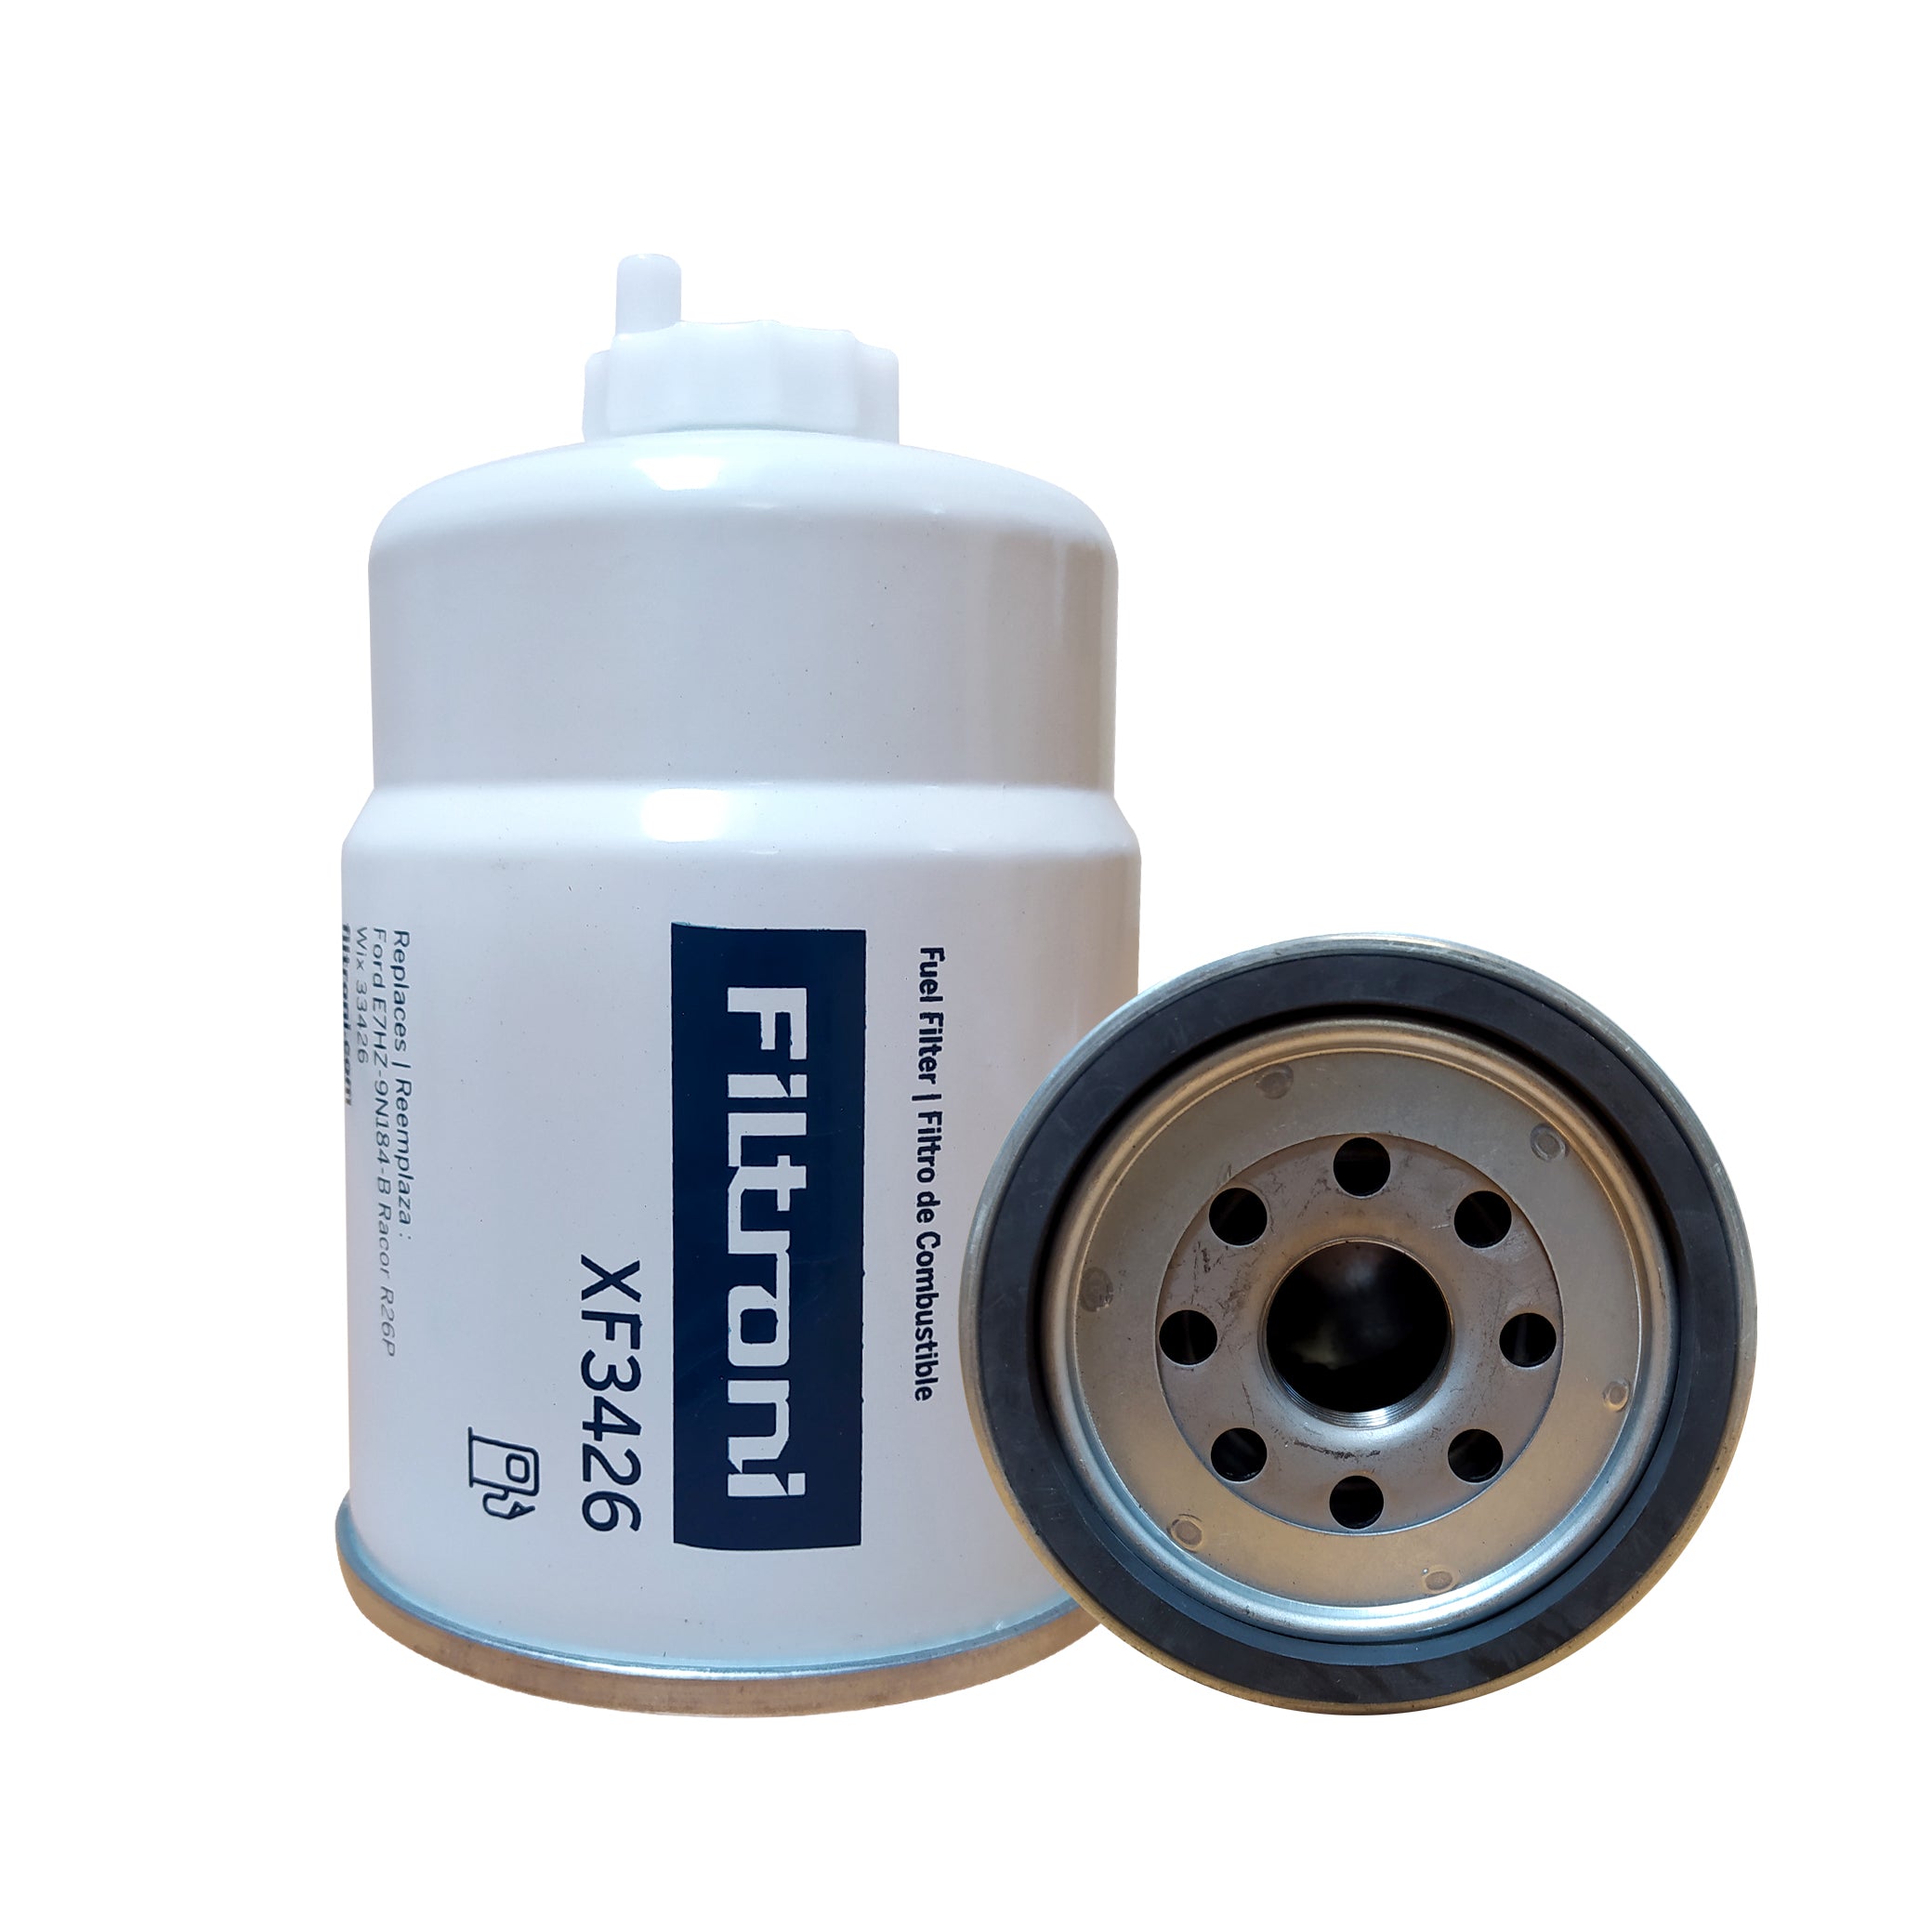 XF3684 FILTRONI Filtro Combustible Separador de Agua Fuel Manager ERT –  Filtroni